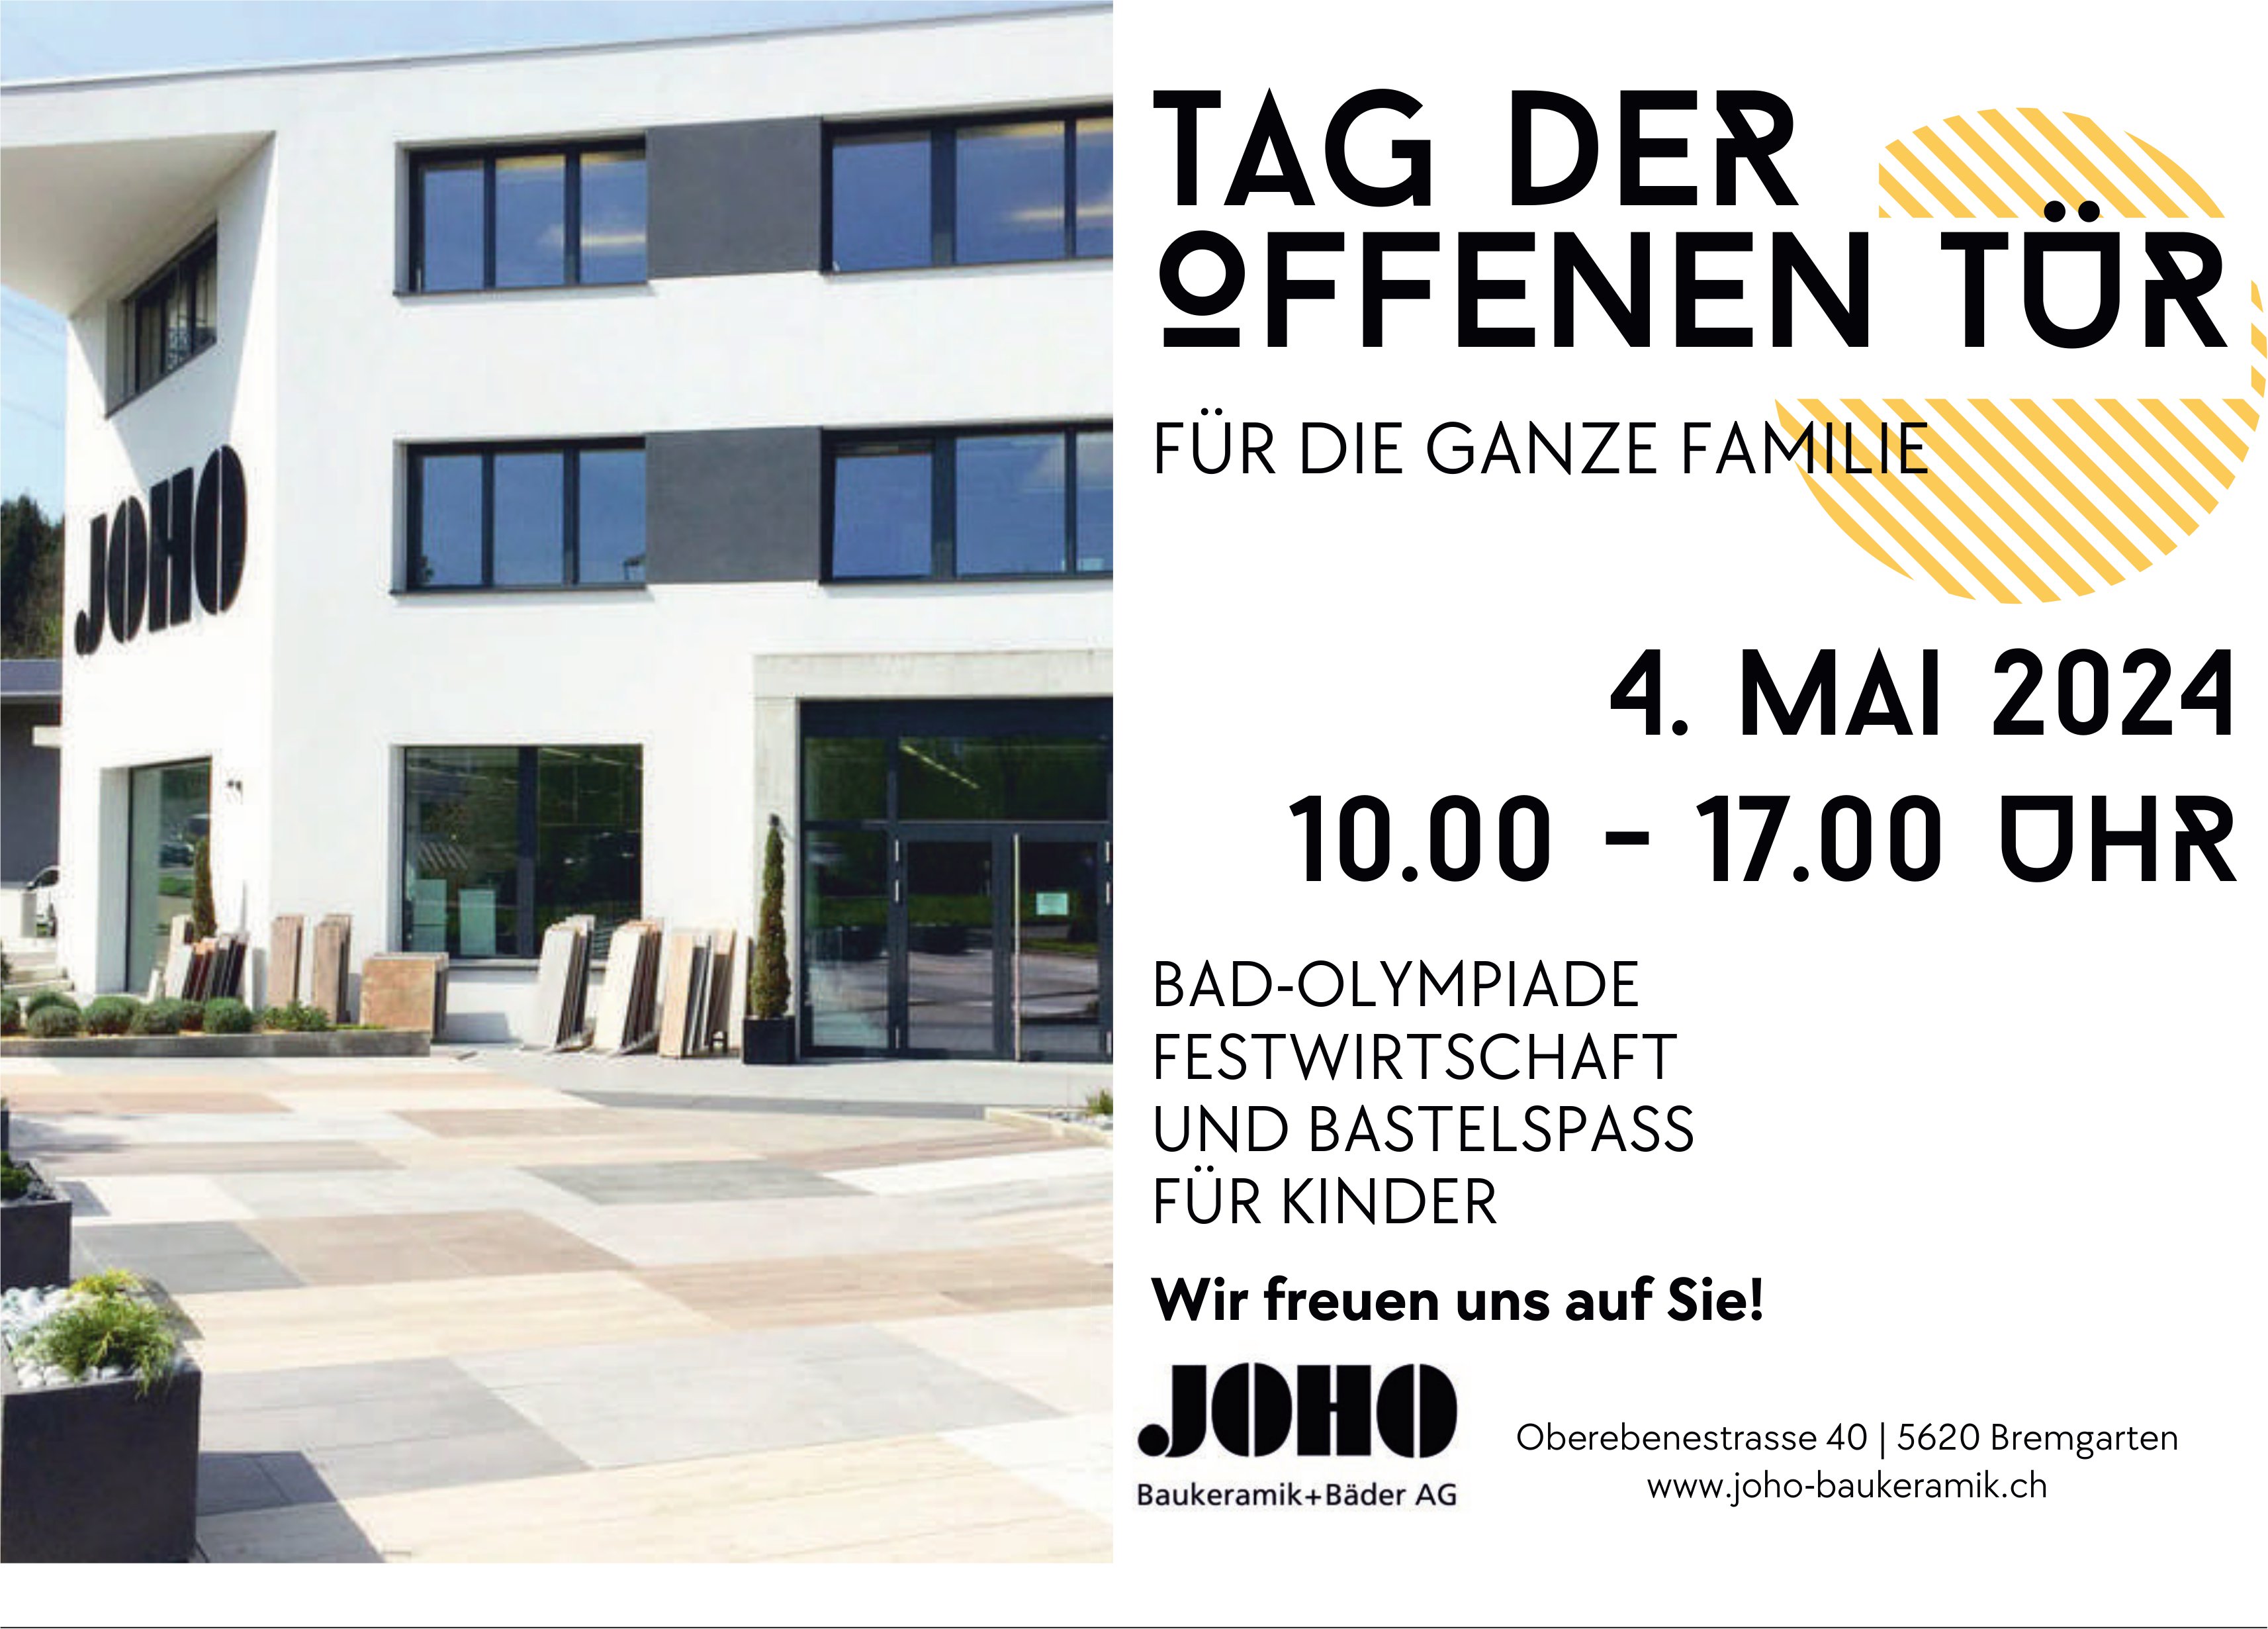 Tag der offenen Tür, 4. Mai, Joho Baukeramik + Bäder AG, Bremgarten